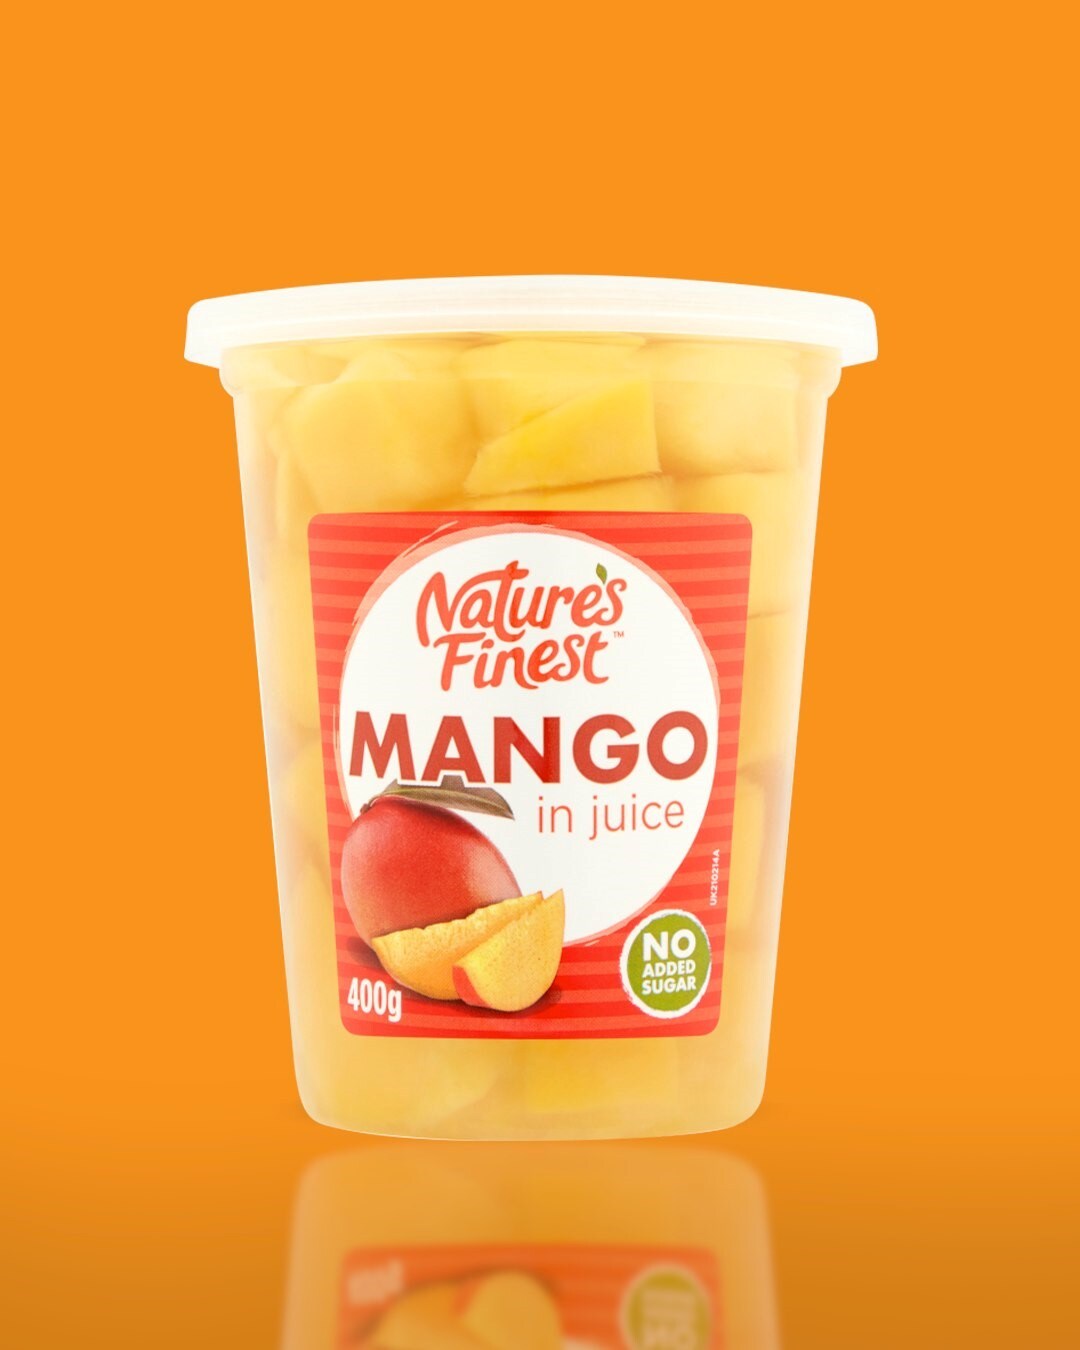 Mango in juice